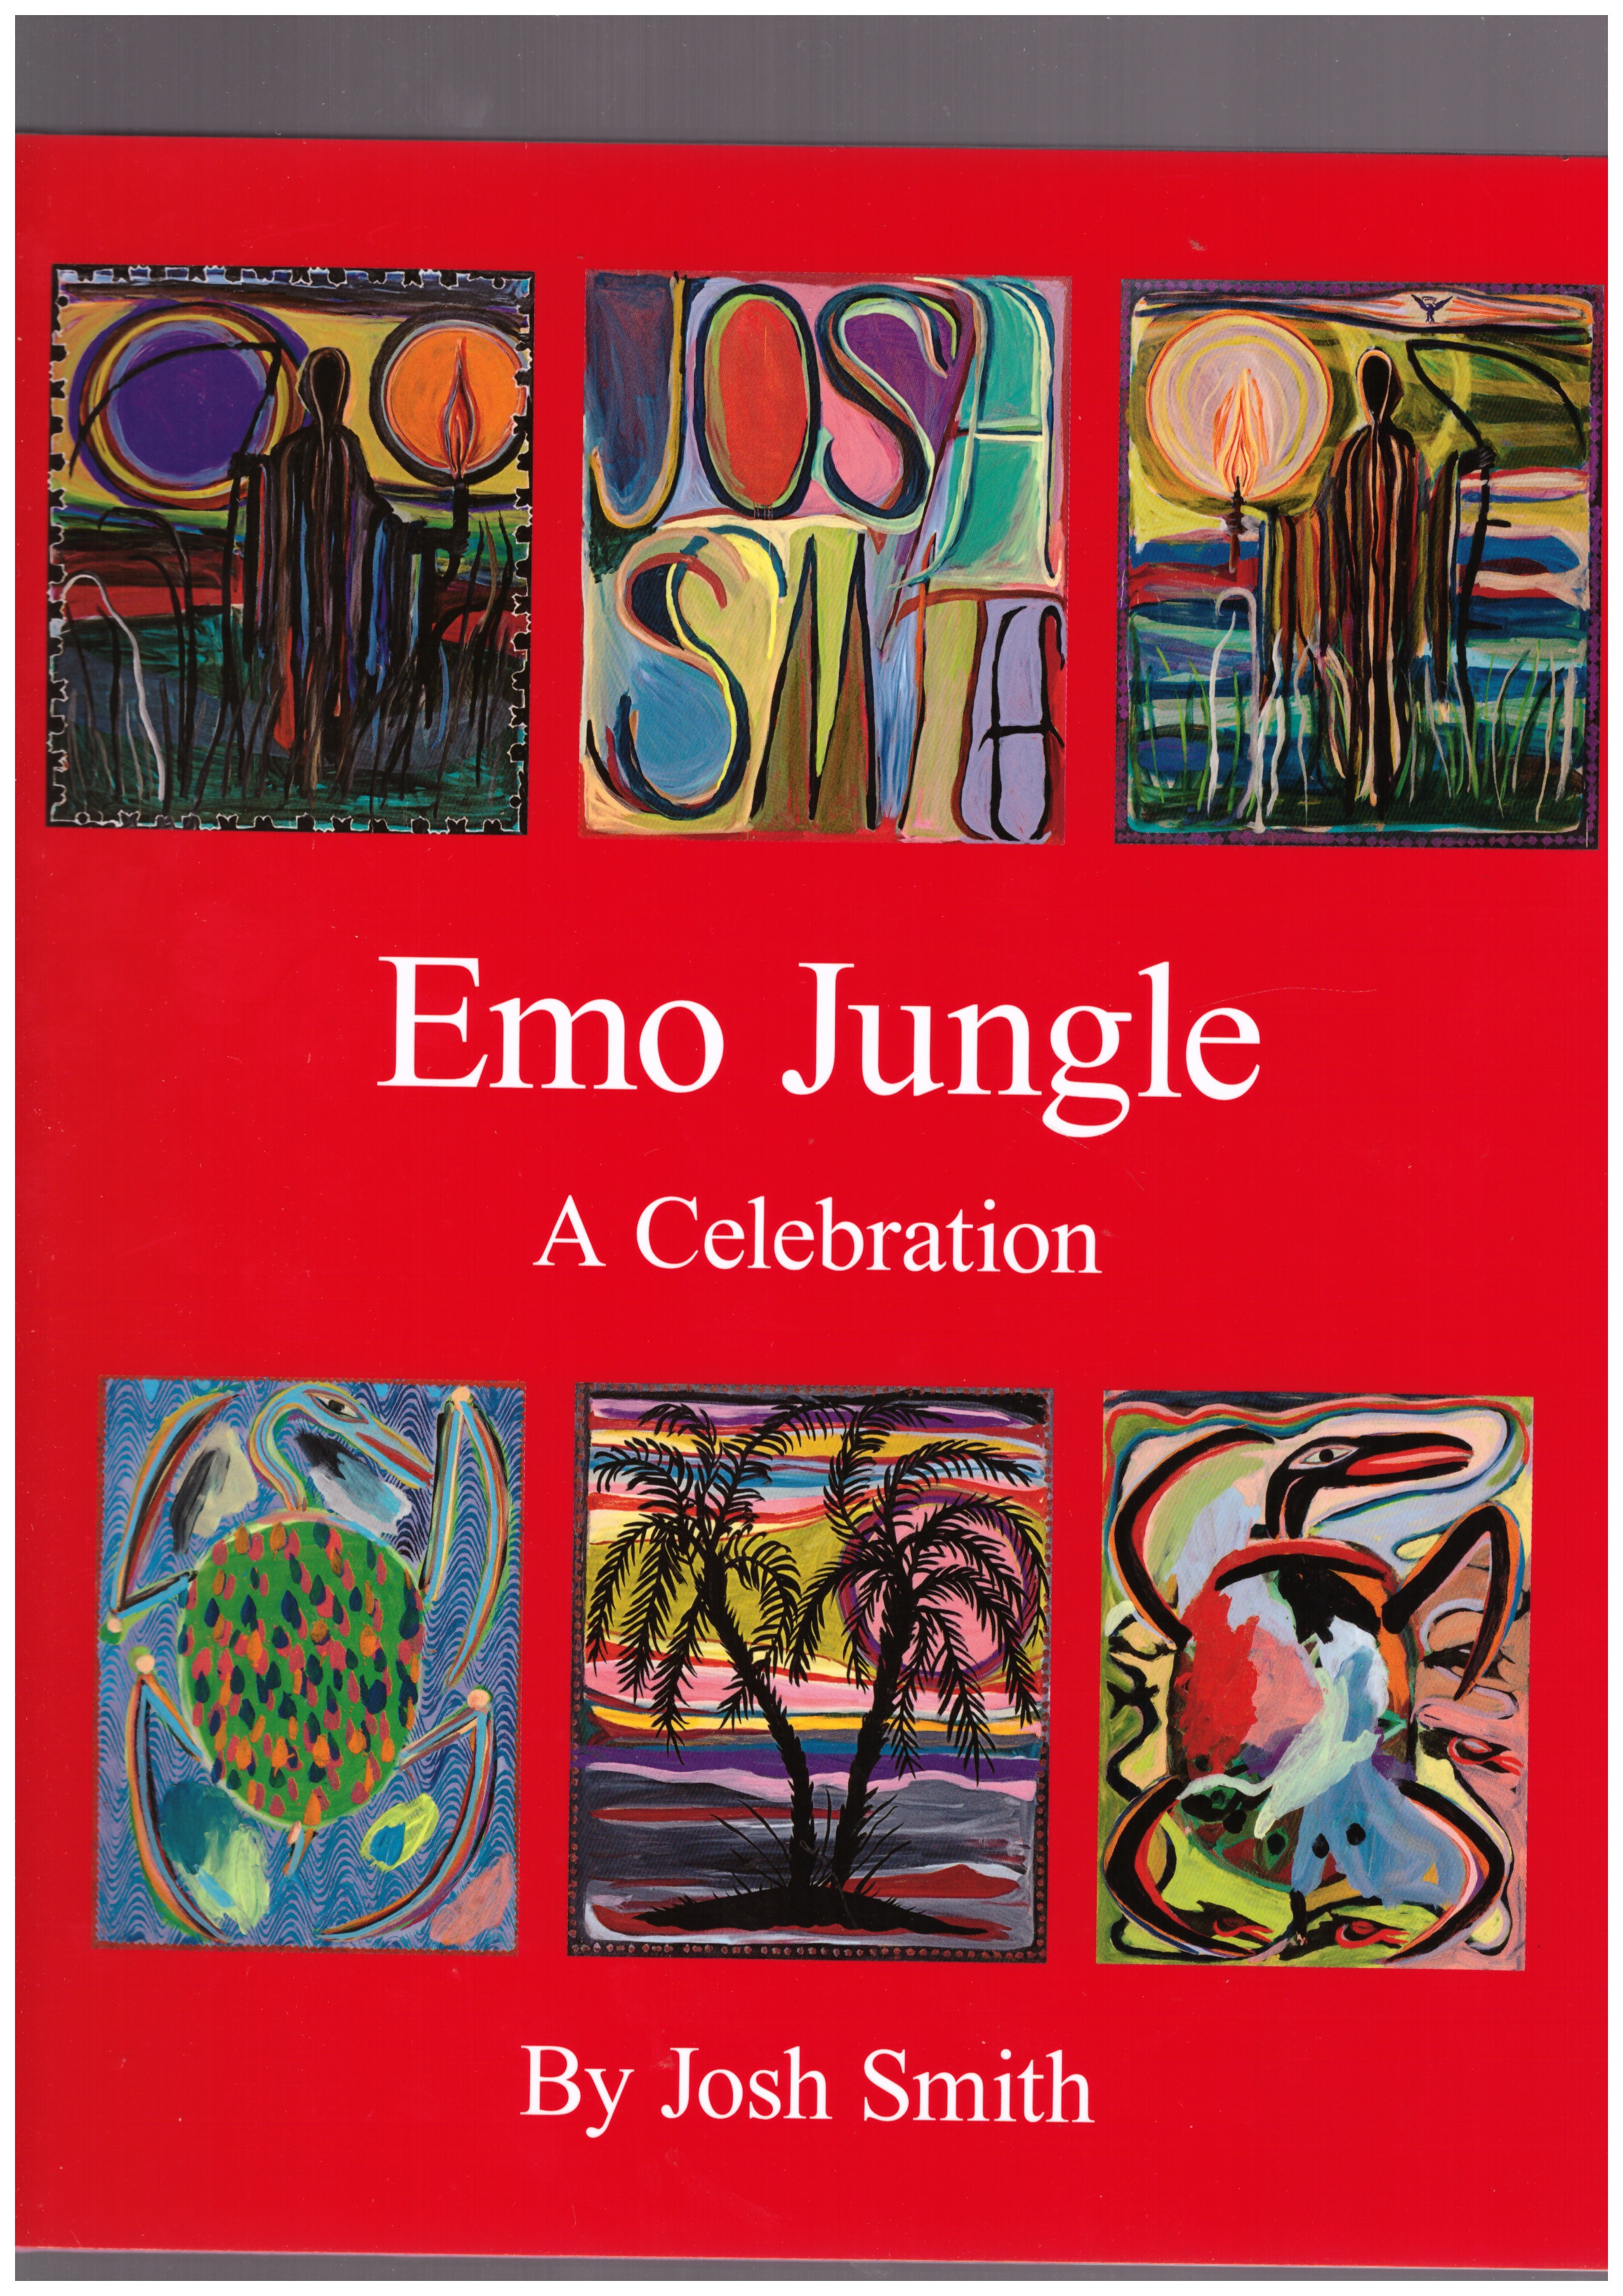 Josh Smith: Emo Jungle, a Celebration